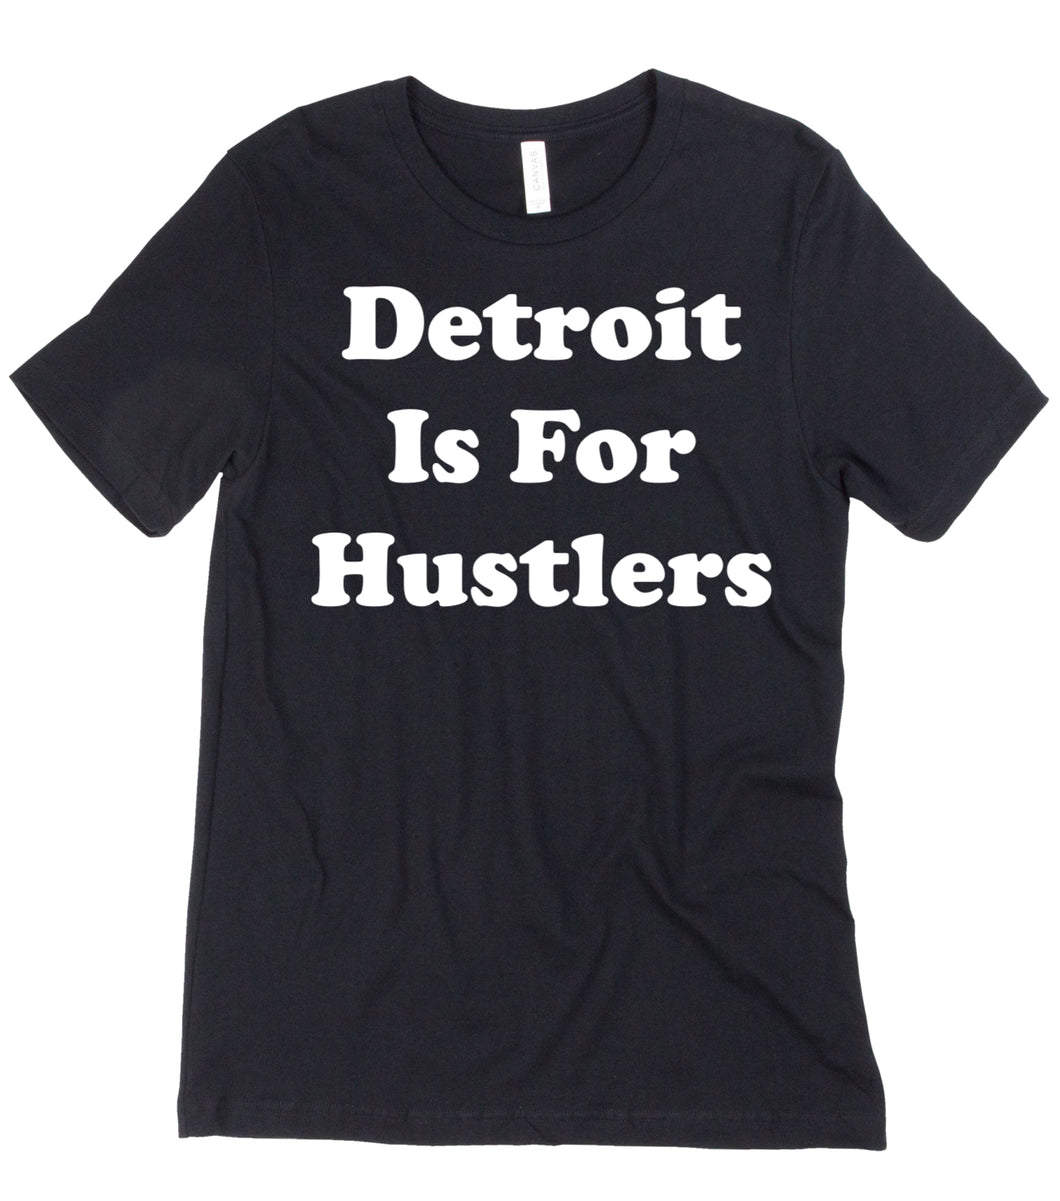 Detroit is for Hustlers